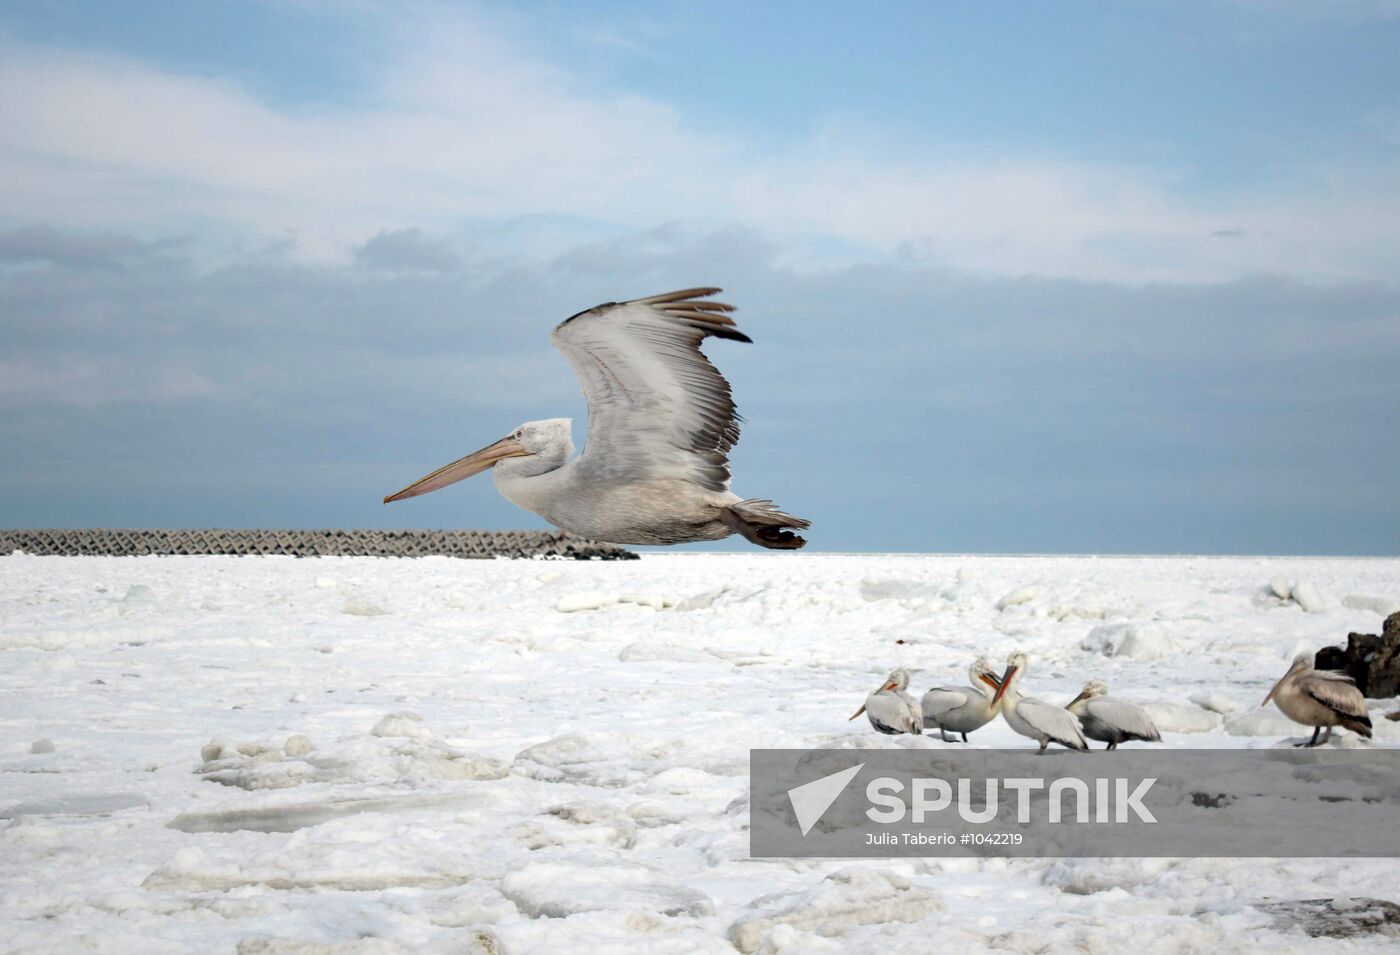 Wintering pelicans in port of Makhachkala